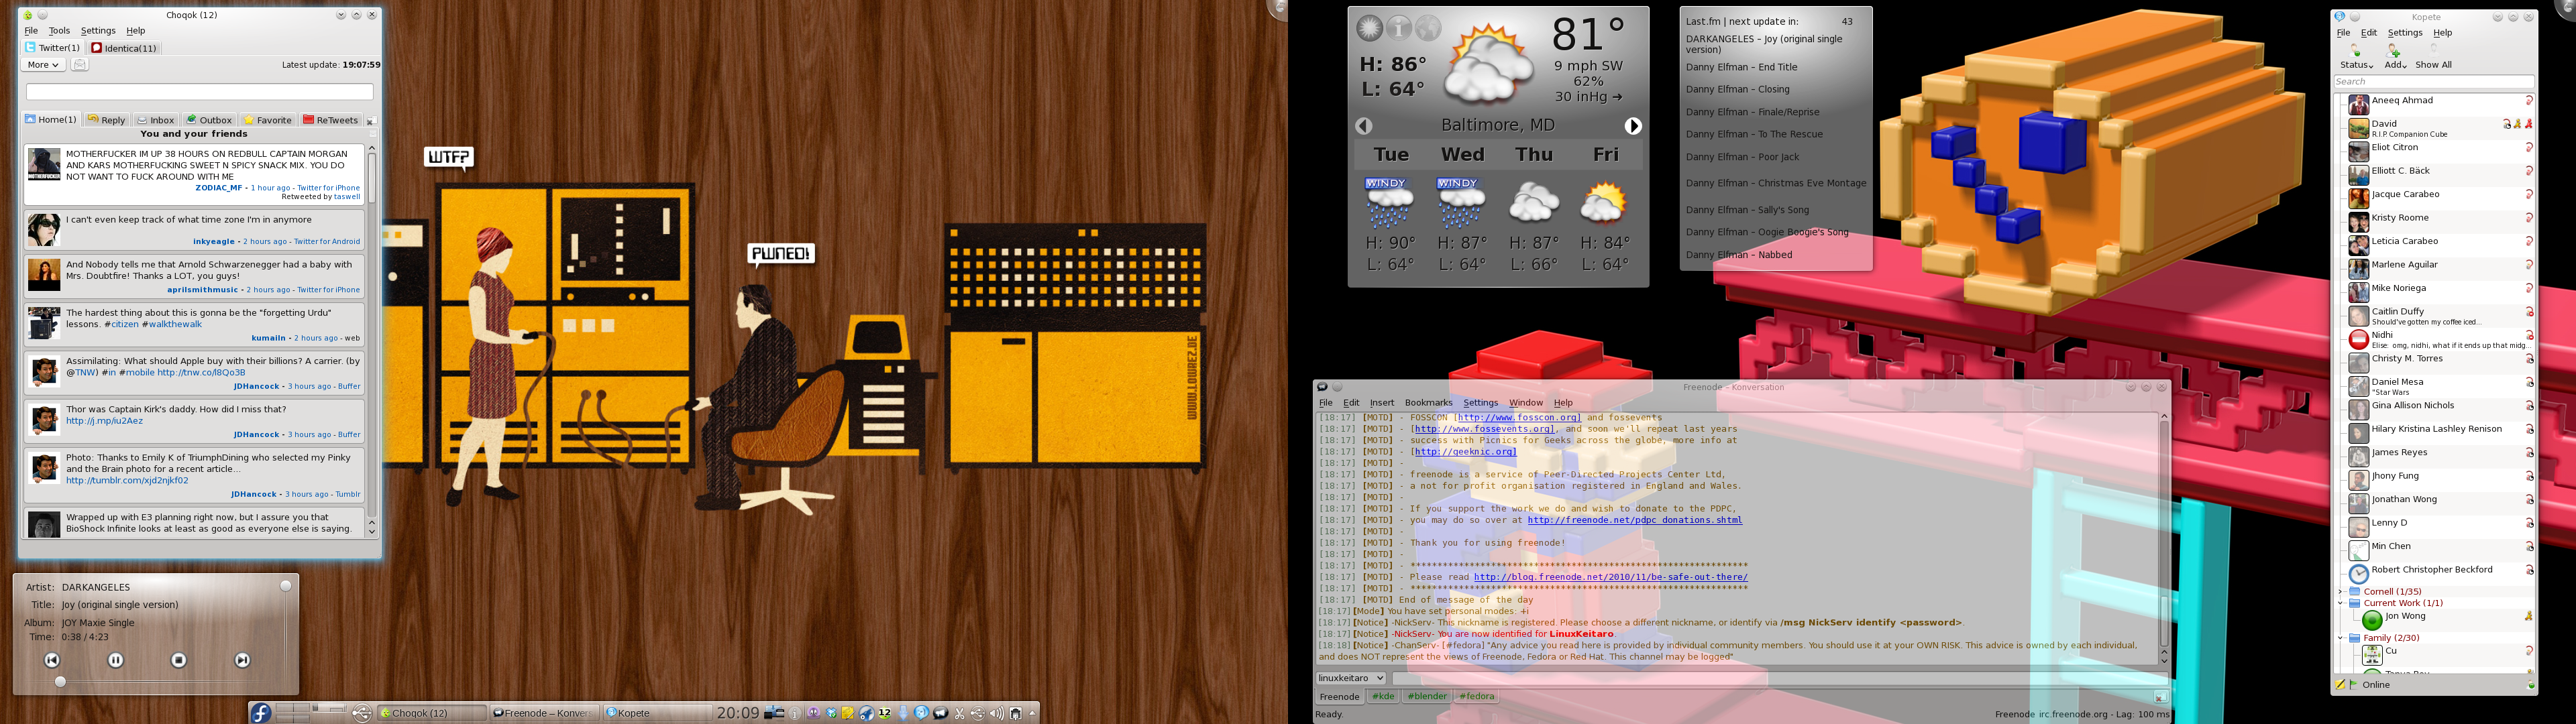 23 May 2011 - Main Activity - desktop 2